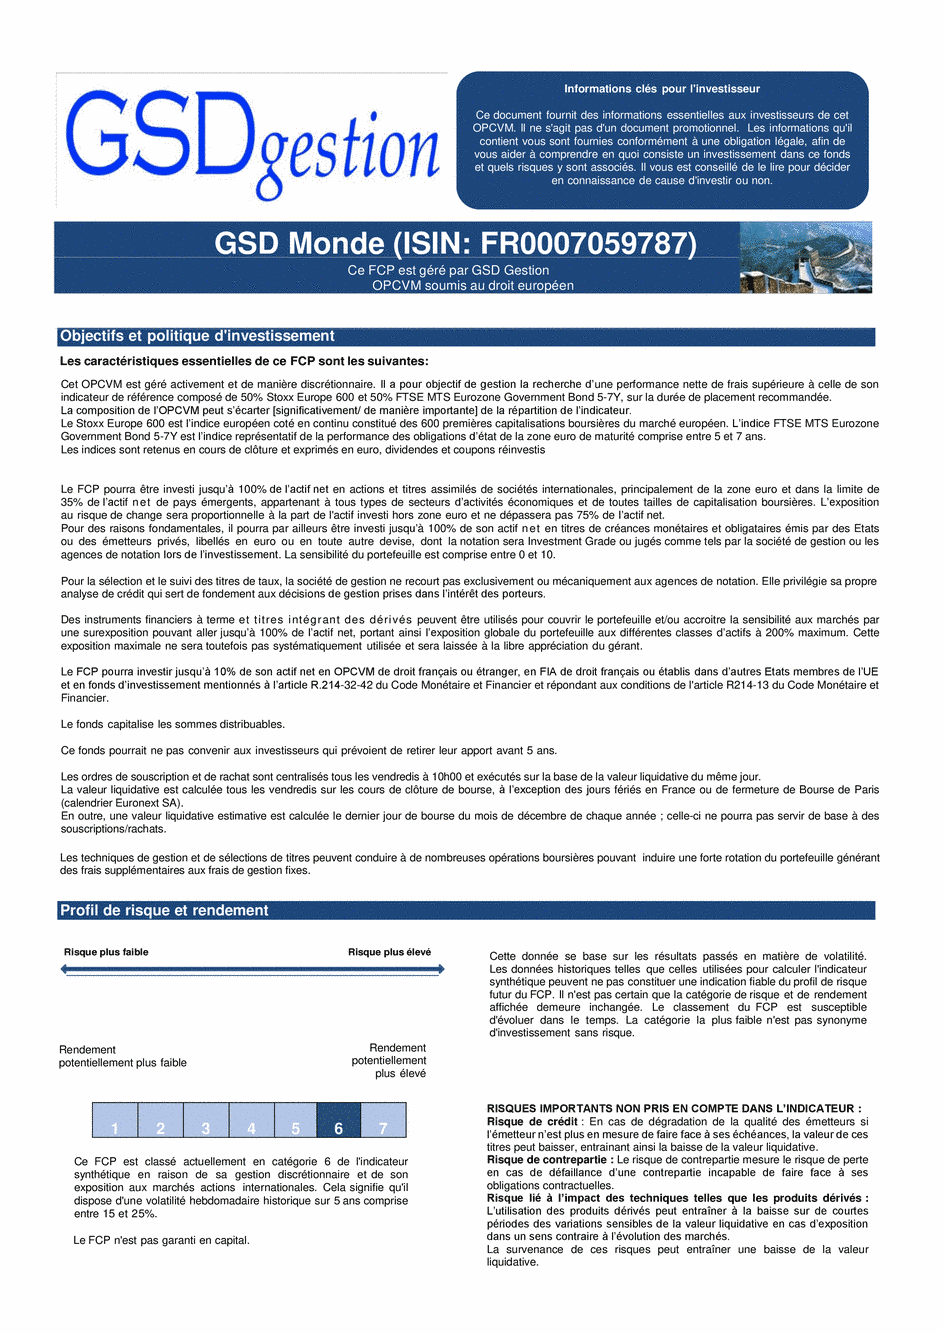 DICI-Prospectus GSD Monde - 12/01/2021 - Français